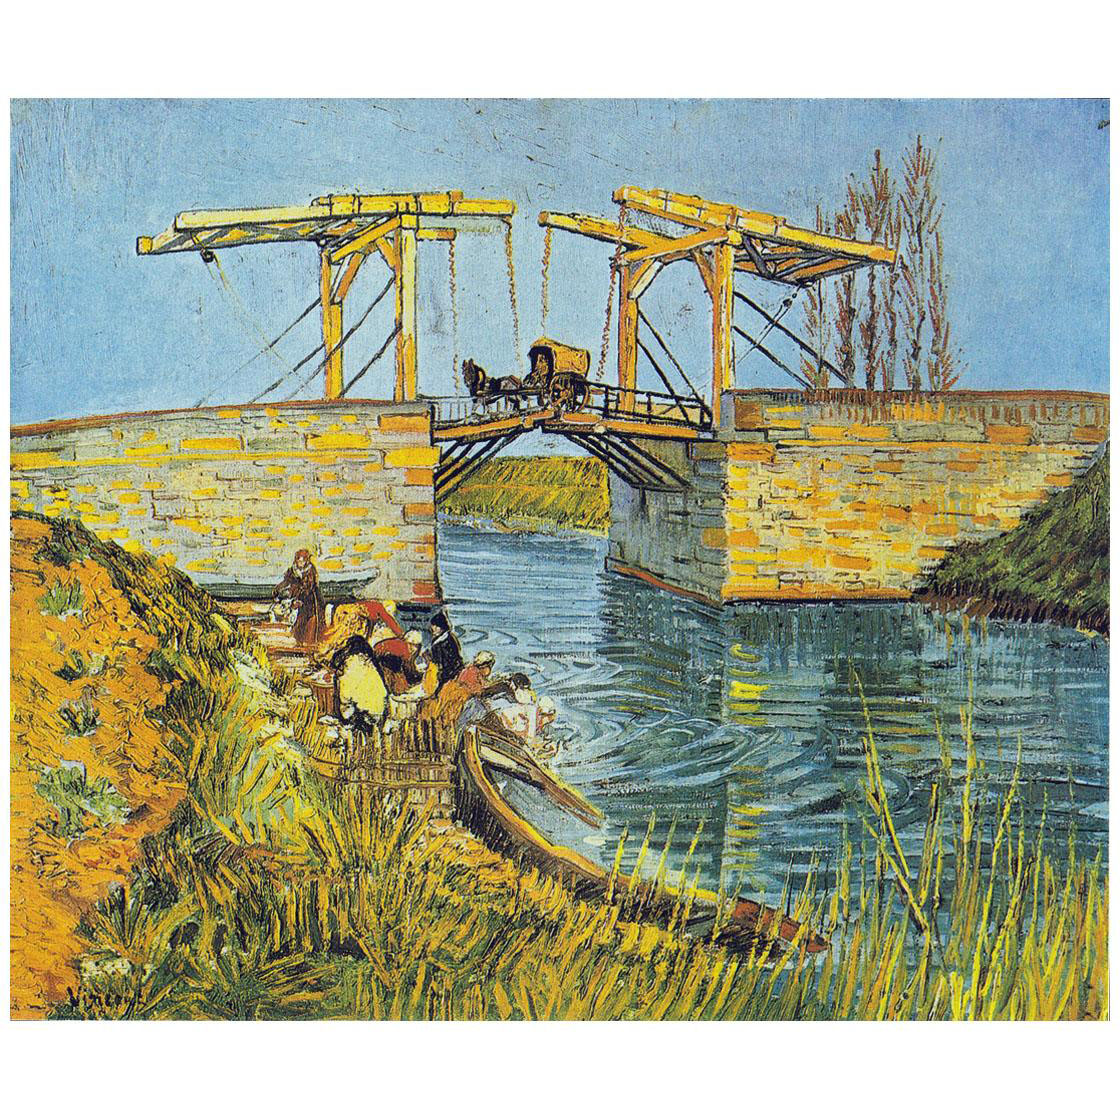 Vincent van Gogh. The Bridge of Langlois. 1888. Kroller-Muller Museum Otterlo